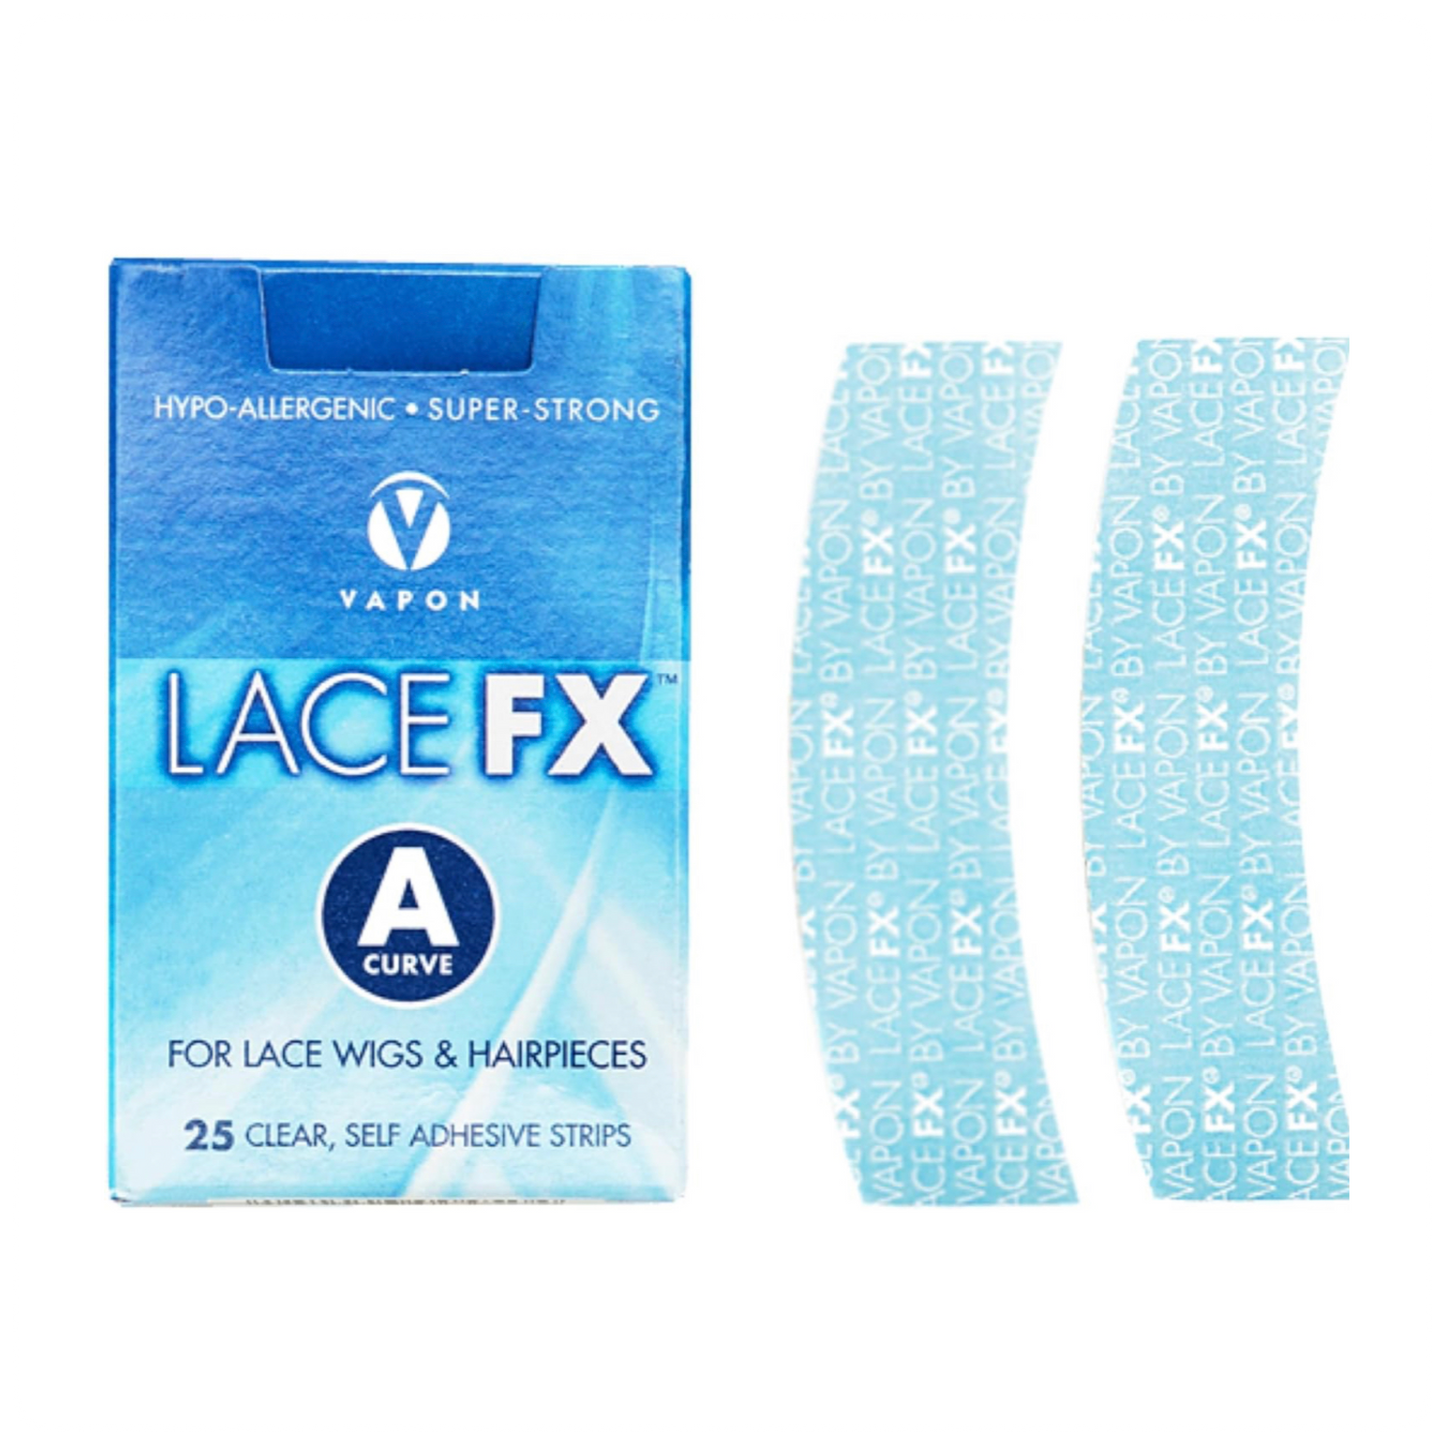 Vapon Lace FX adhesive strips